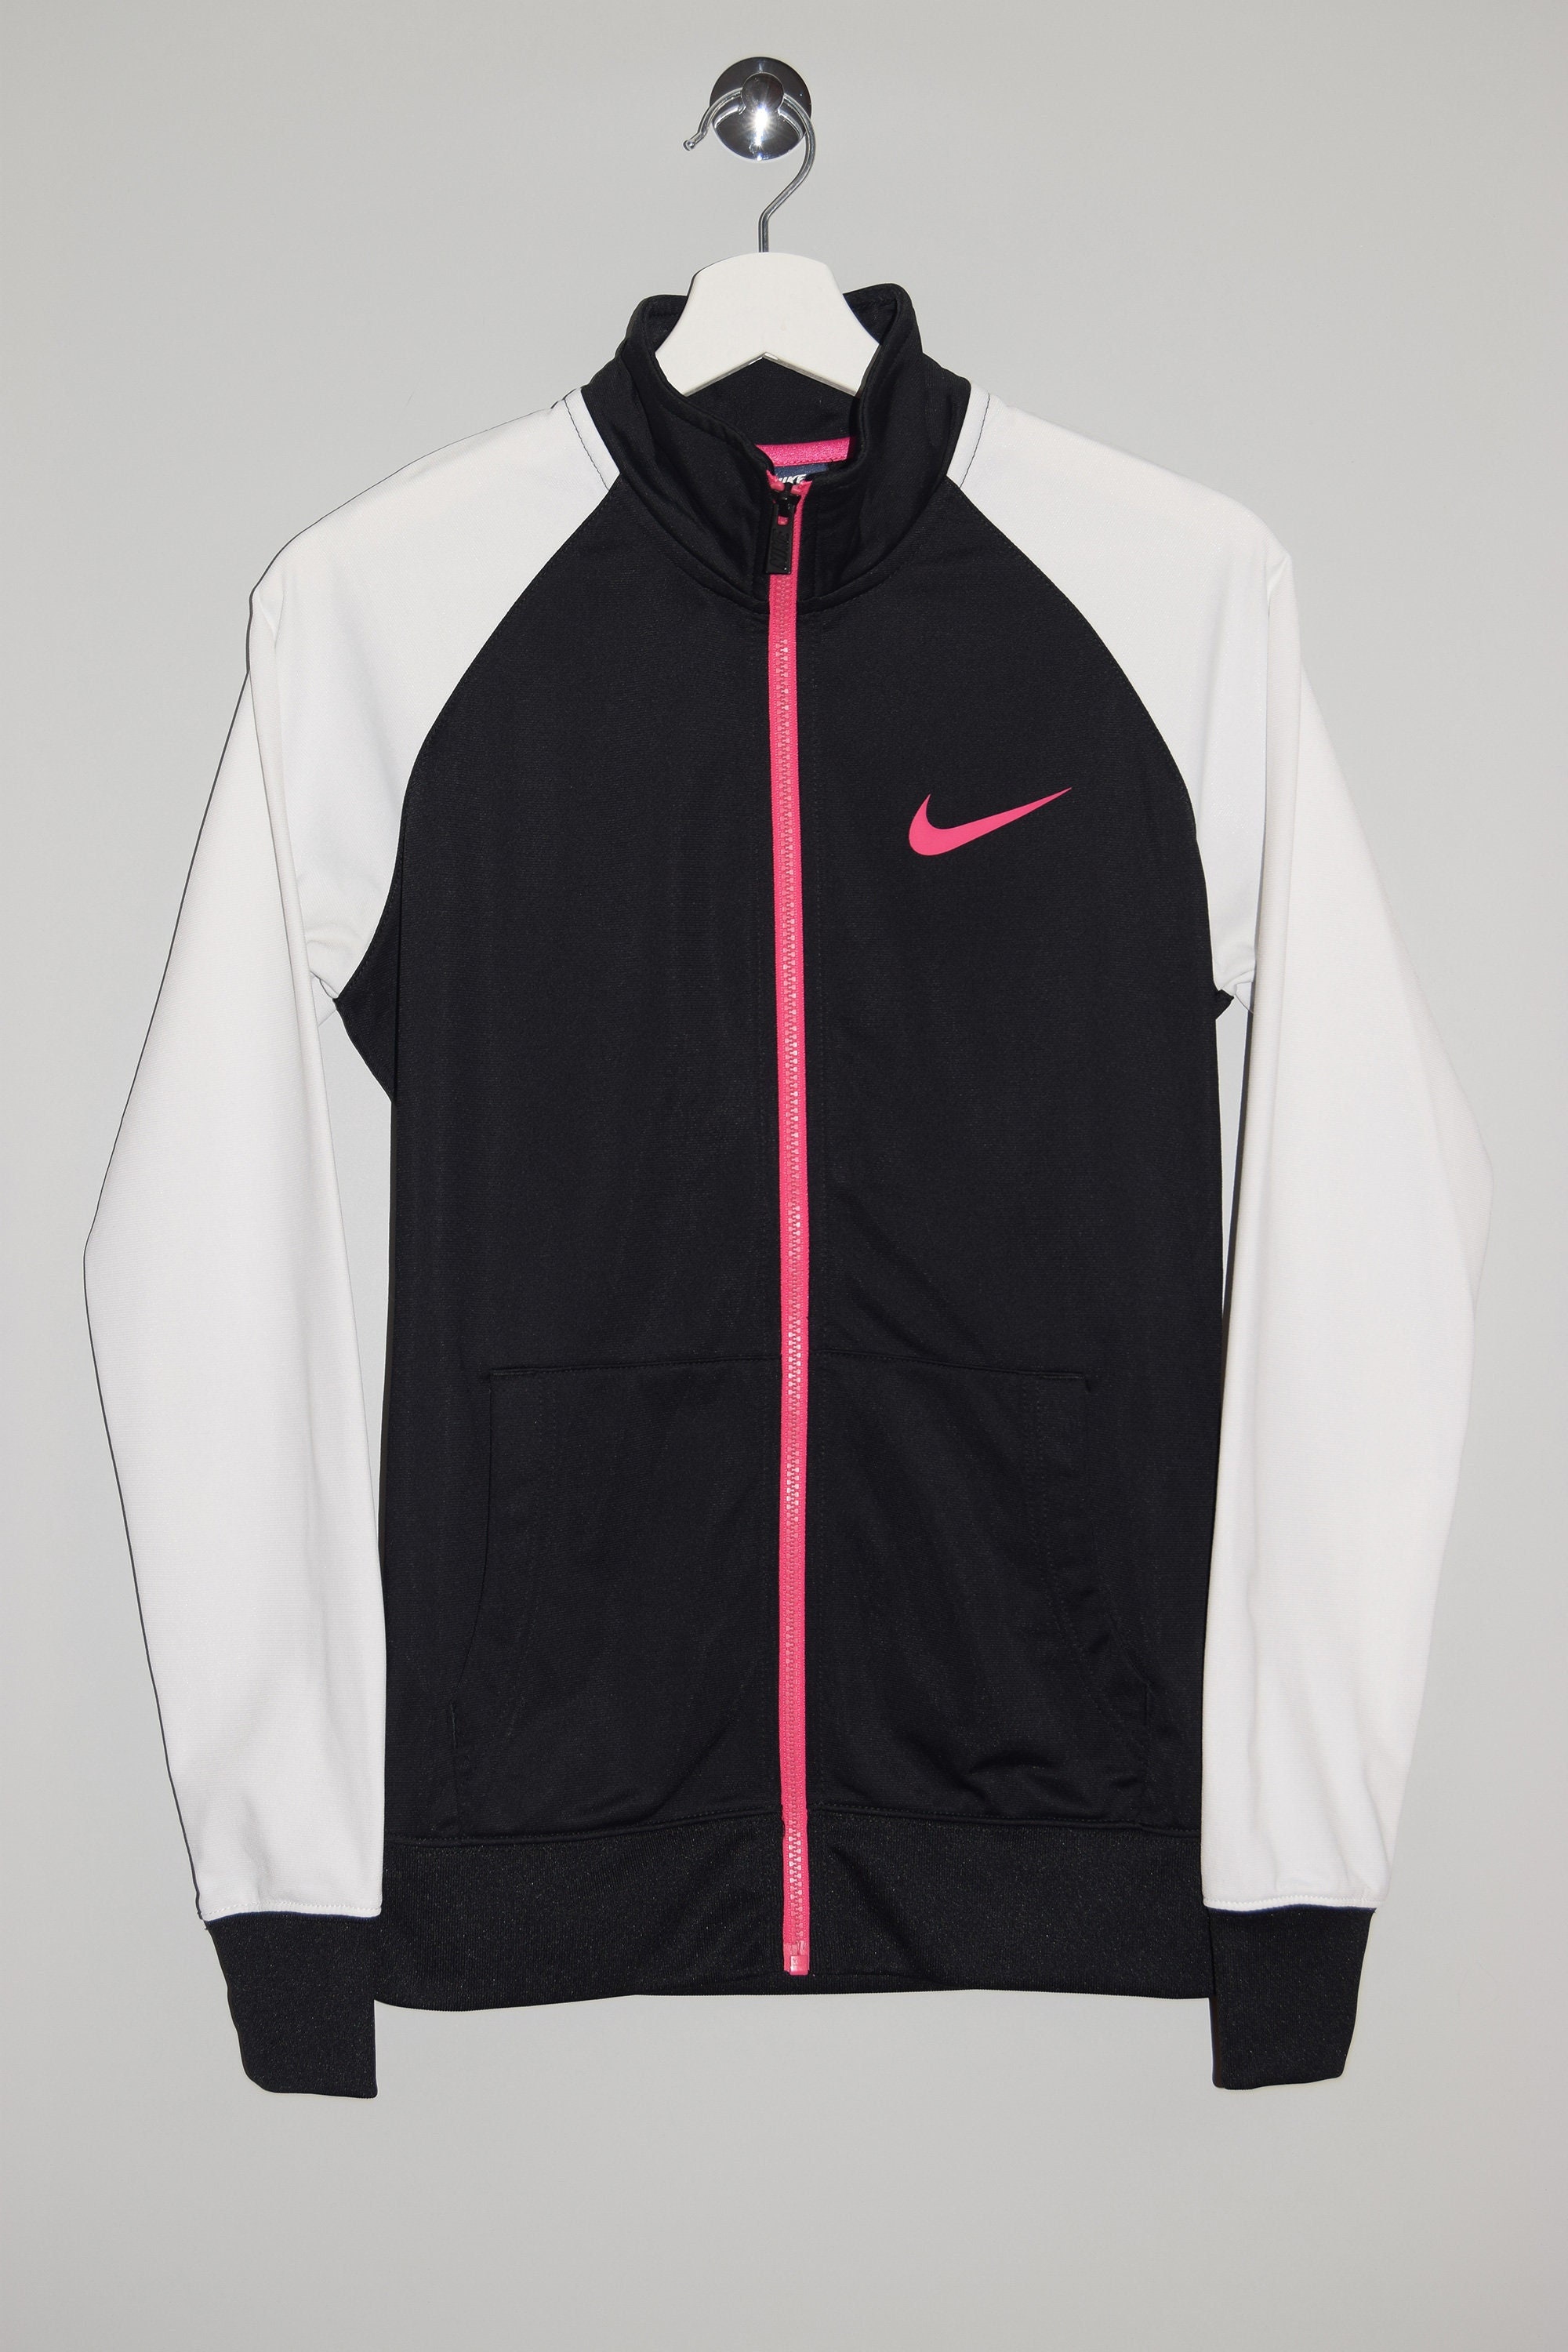 Nike Track Jacket Full Zip Sweater Vintage Tracksuit Sport - Etsy